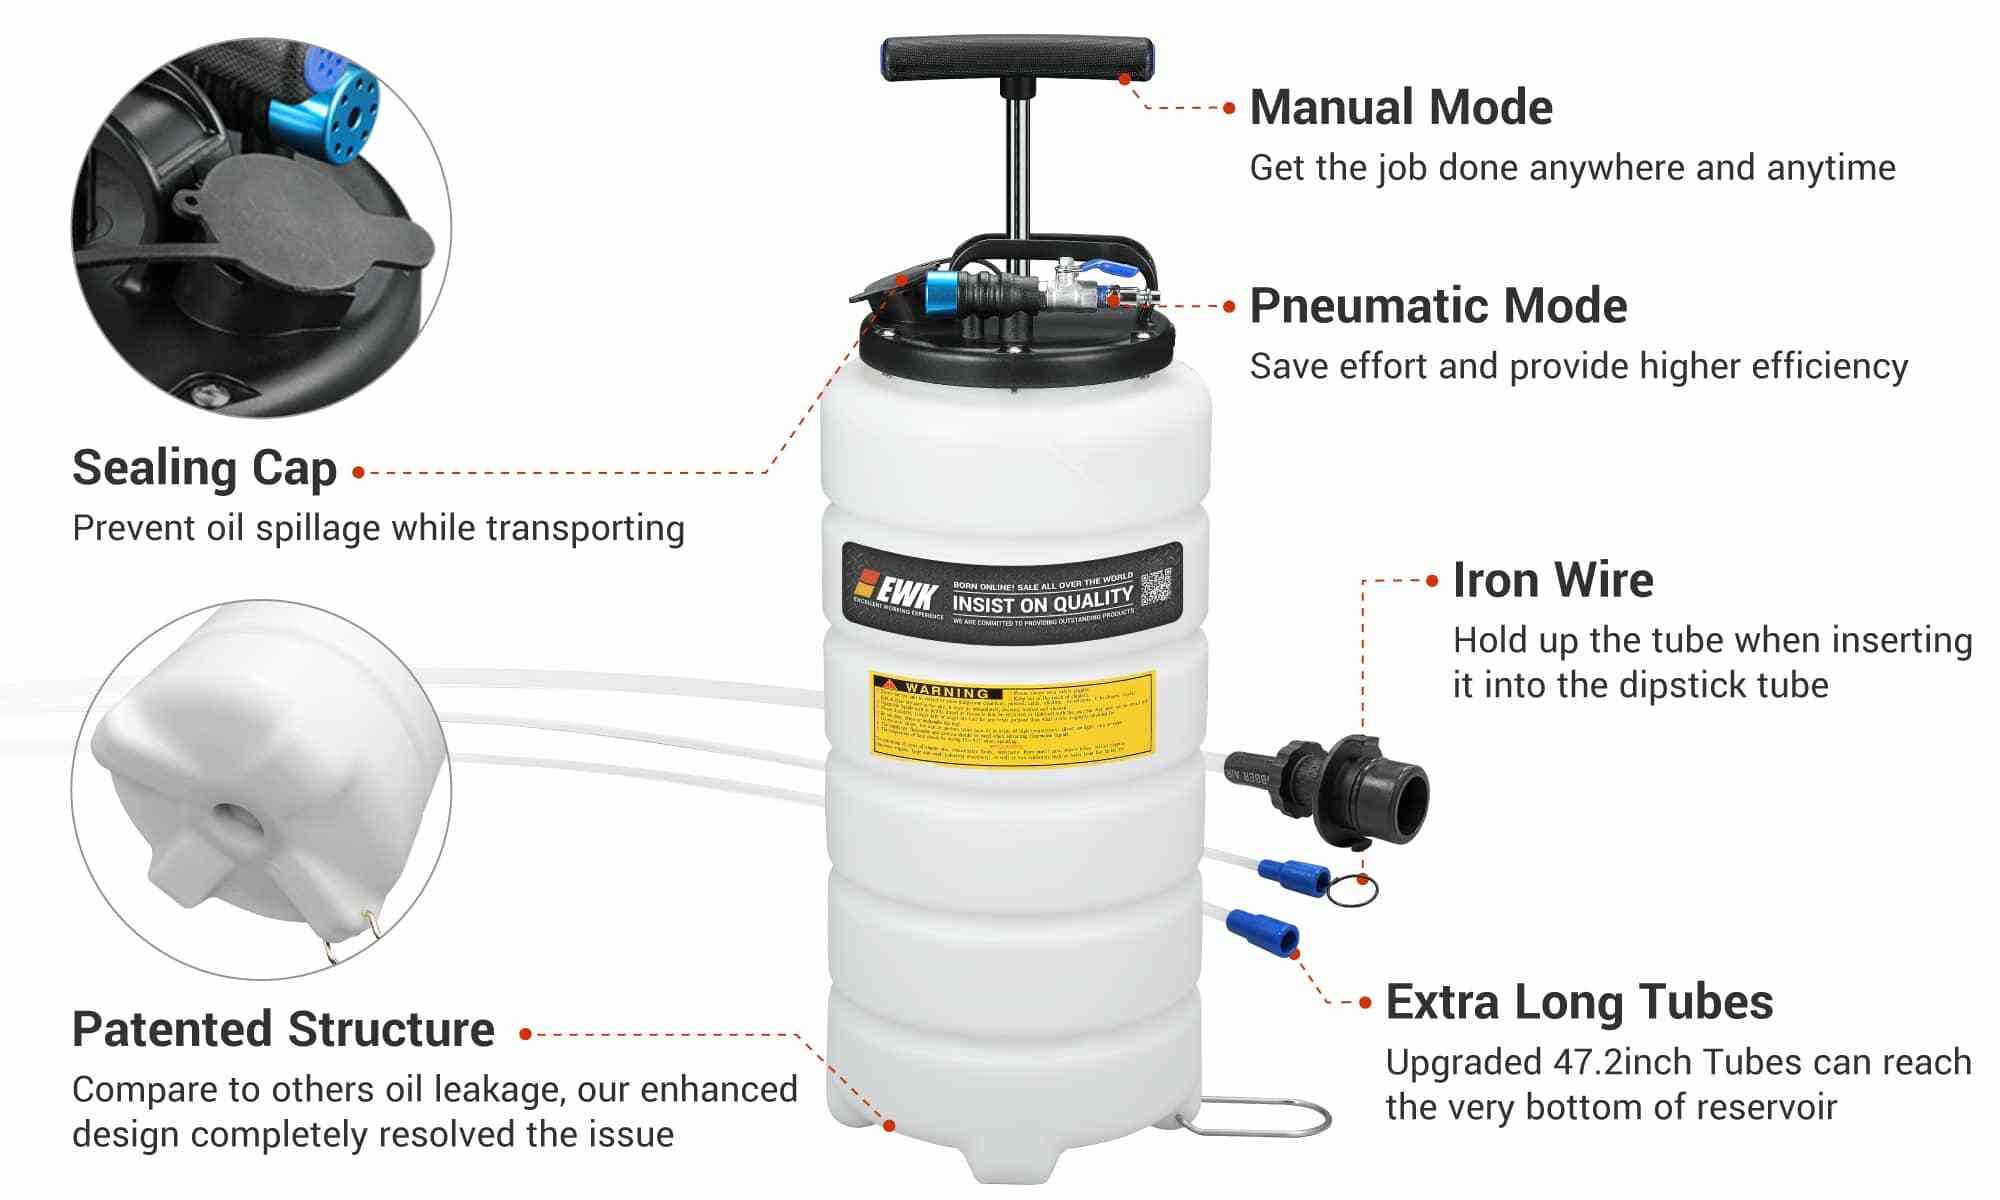 15L Pneumatic / Manual Oil Extractor Pump | EWK